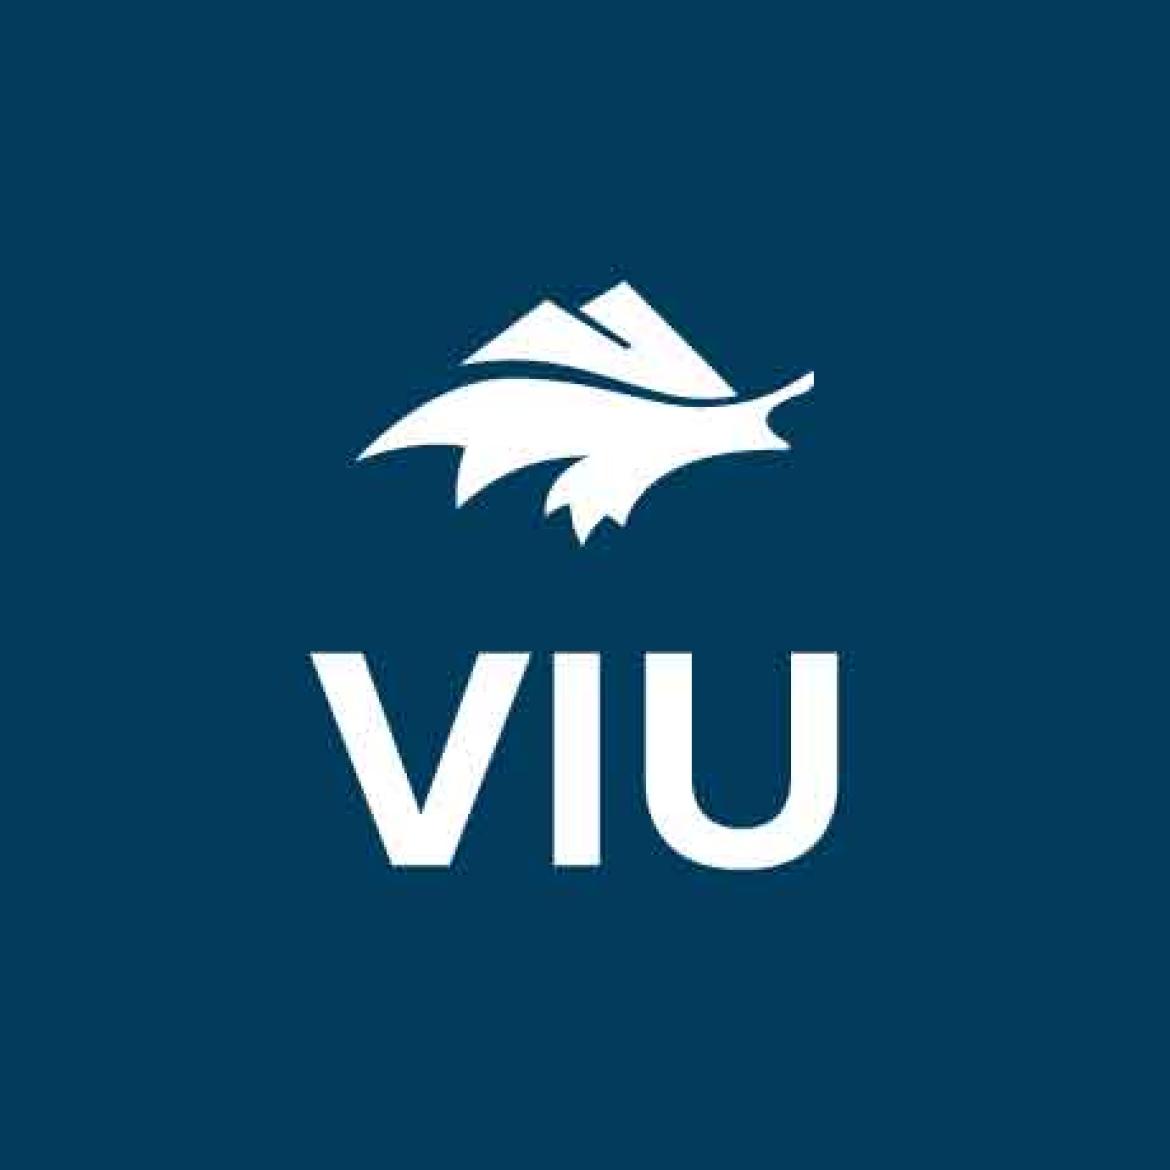 White lettering reading VIU on a dark blue background.